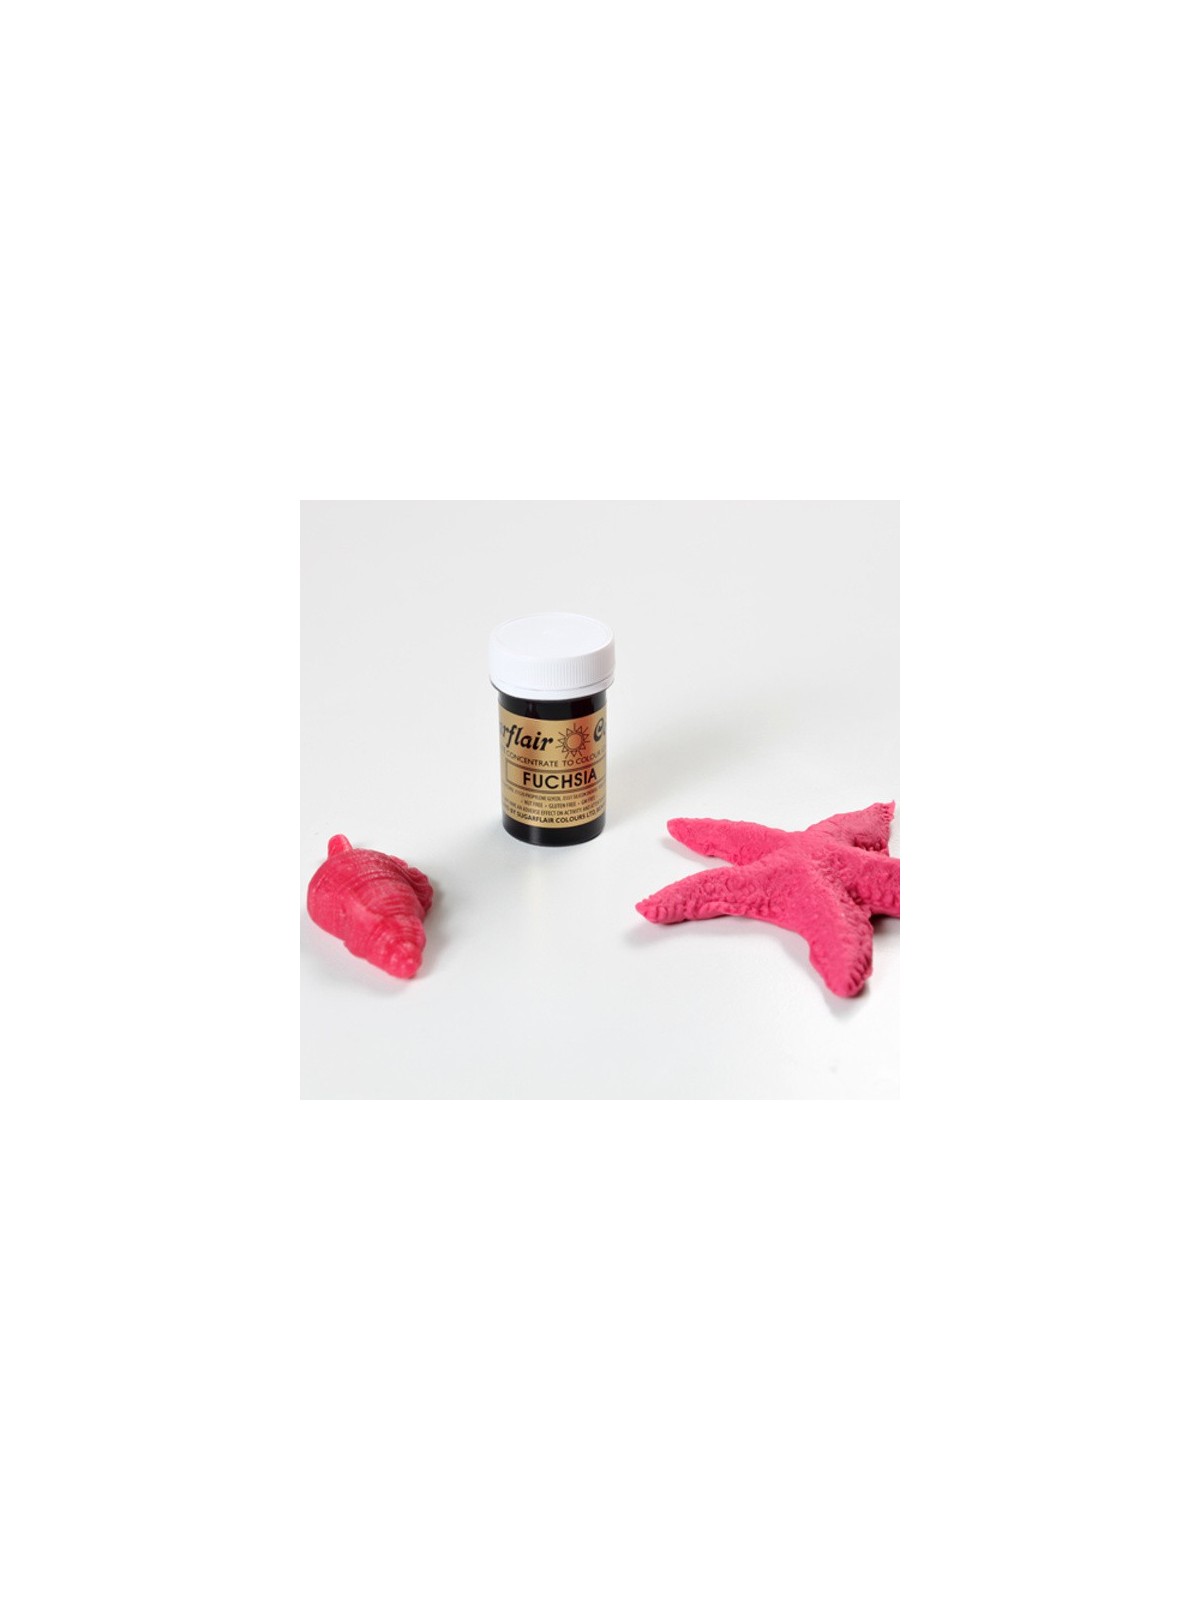 Sugarlair gelová farva - ružová - Fuchsie - 25g